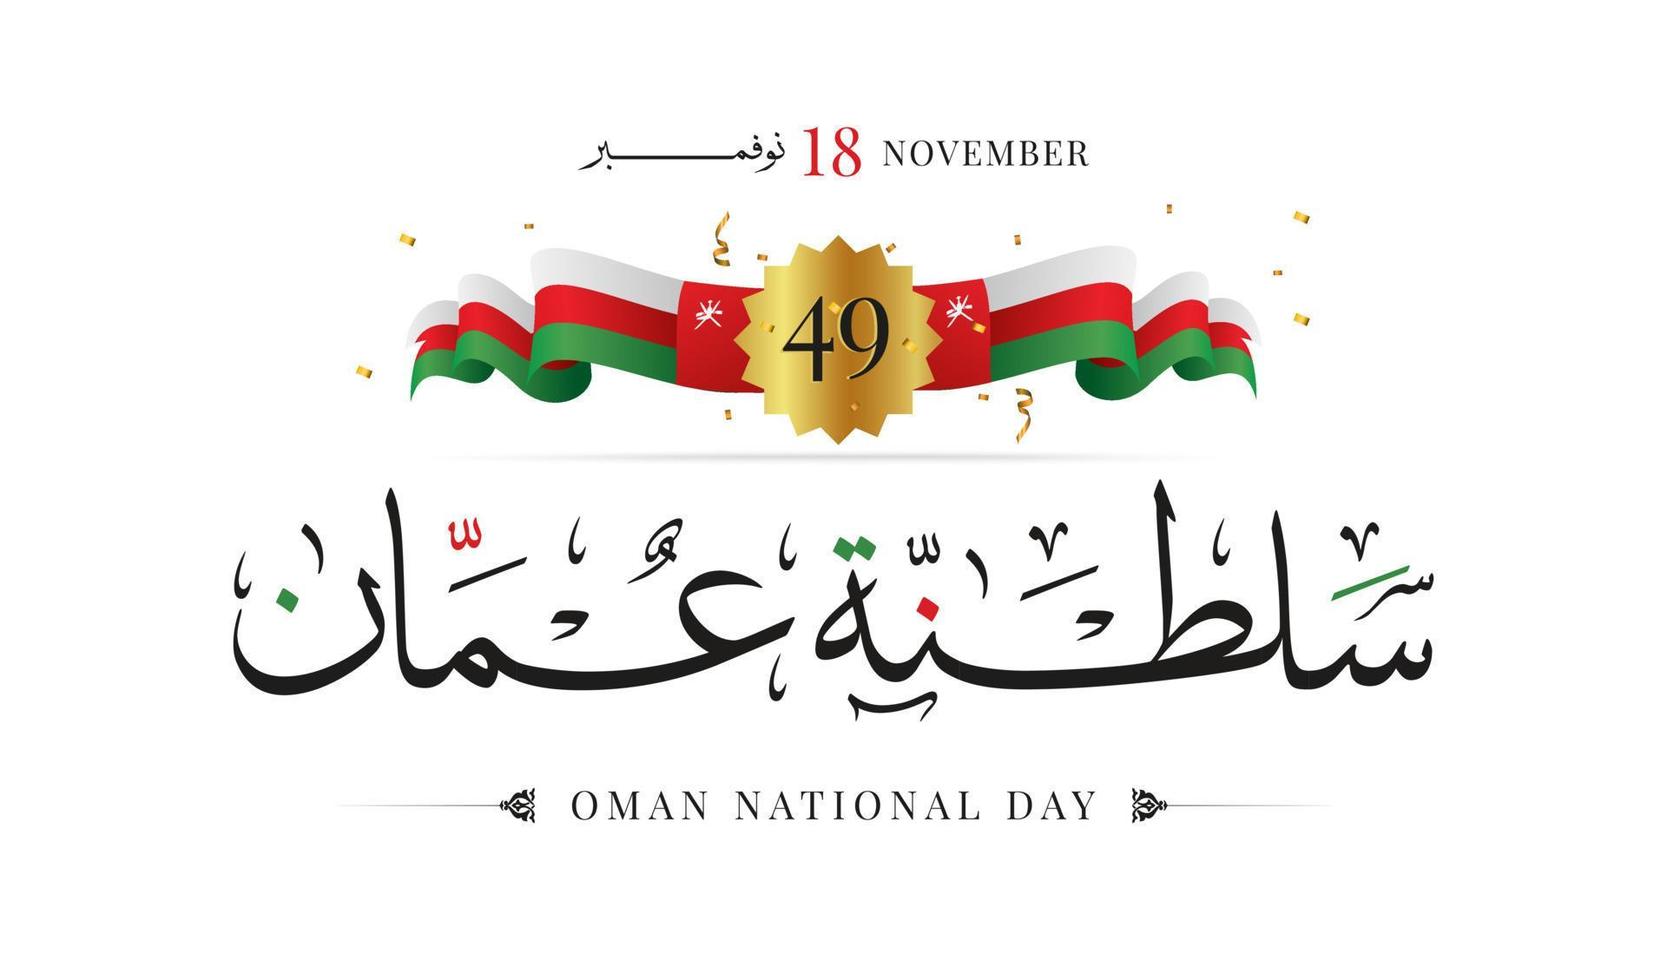 Sultanat von Oman Nationalfeiertag 18. November Vektorillustration vektor